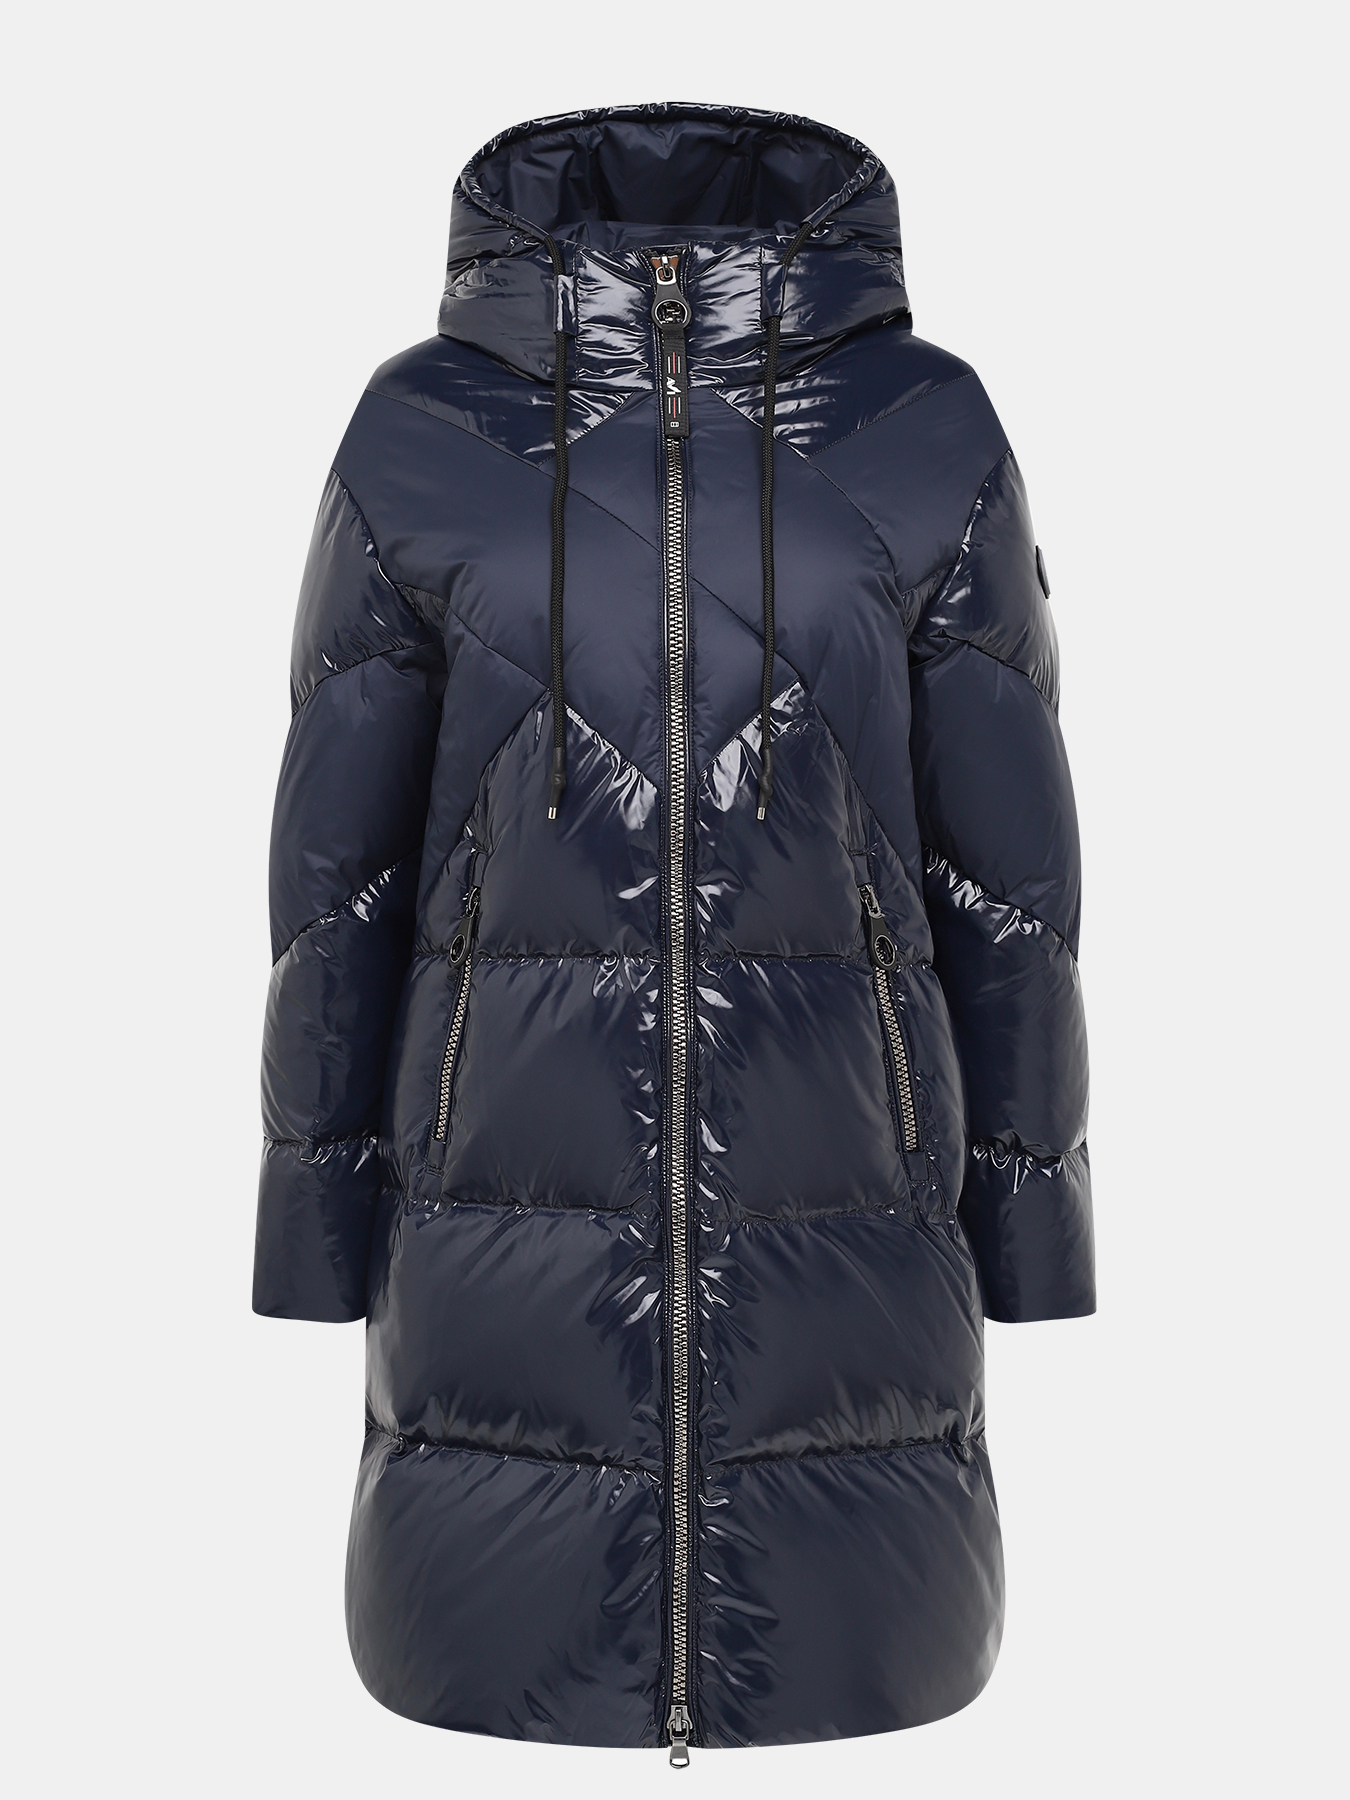 Пальто зимнее AVI 433522-022, цвет темно-синий, размер 48